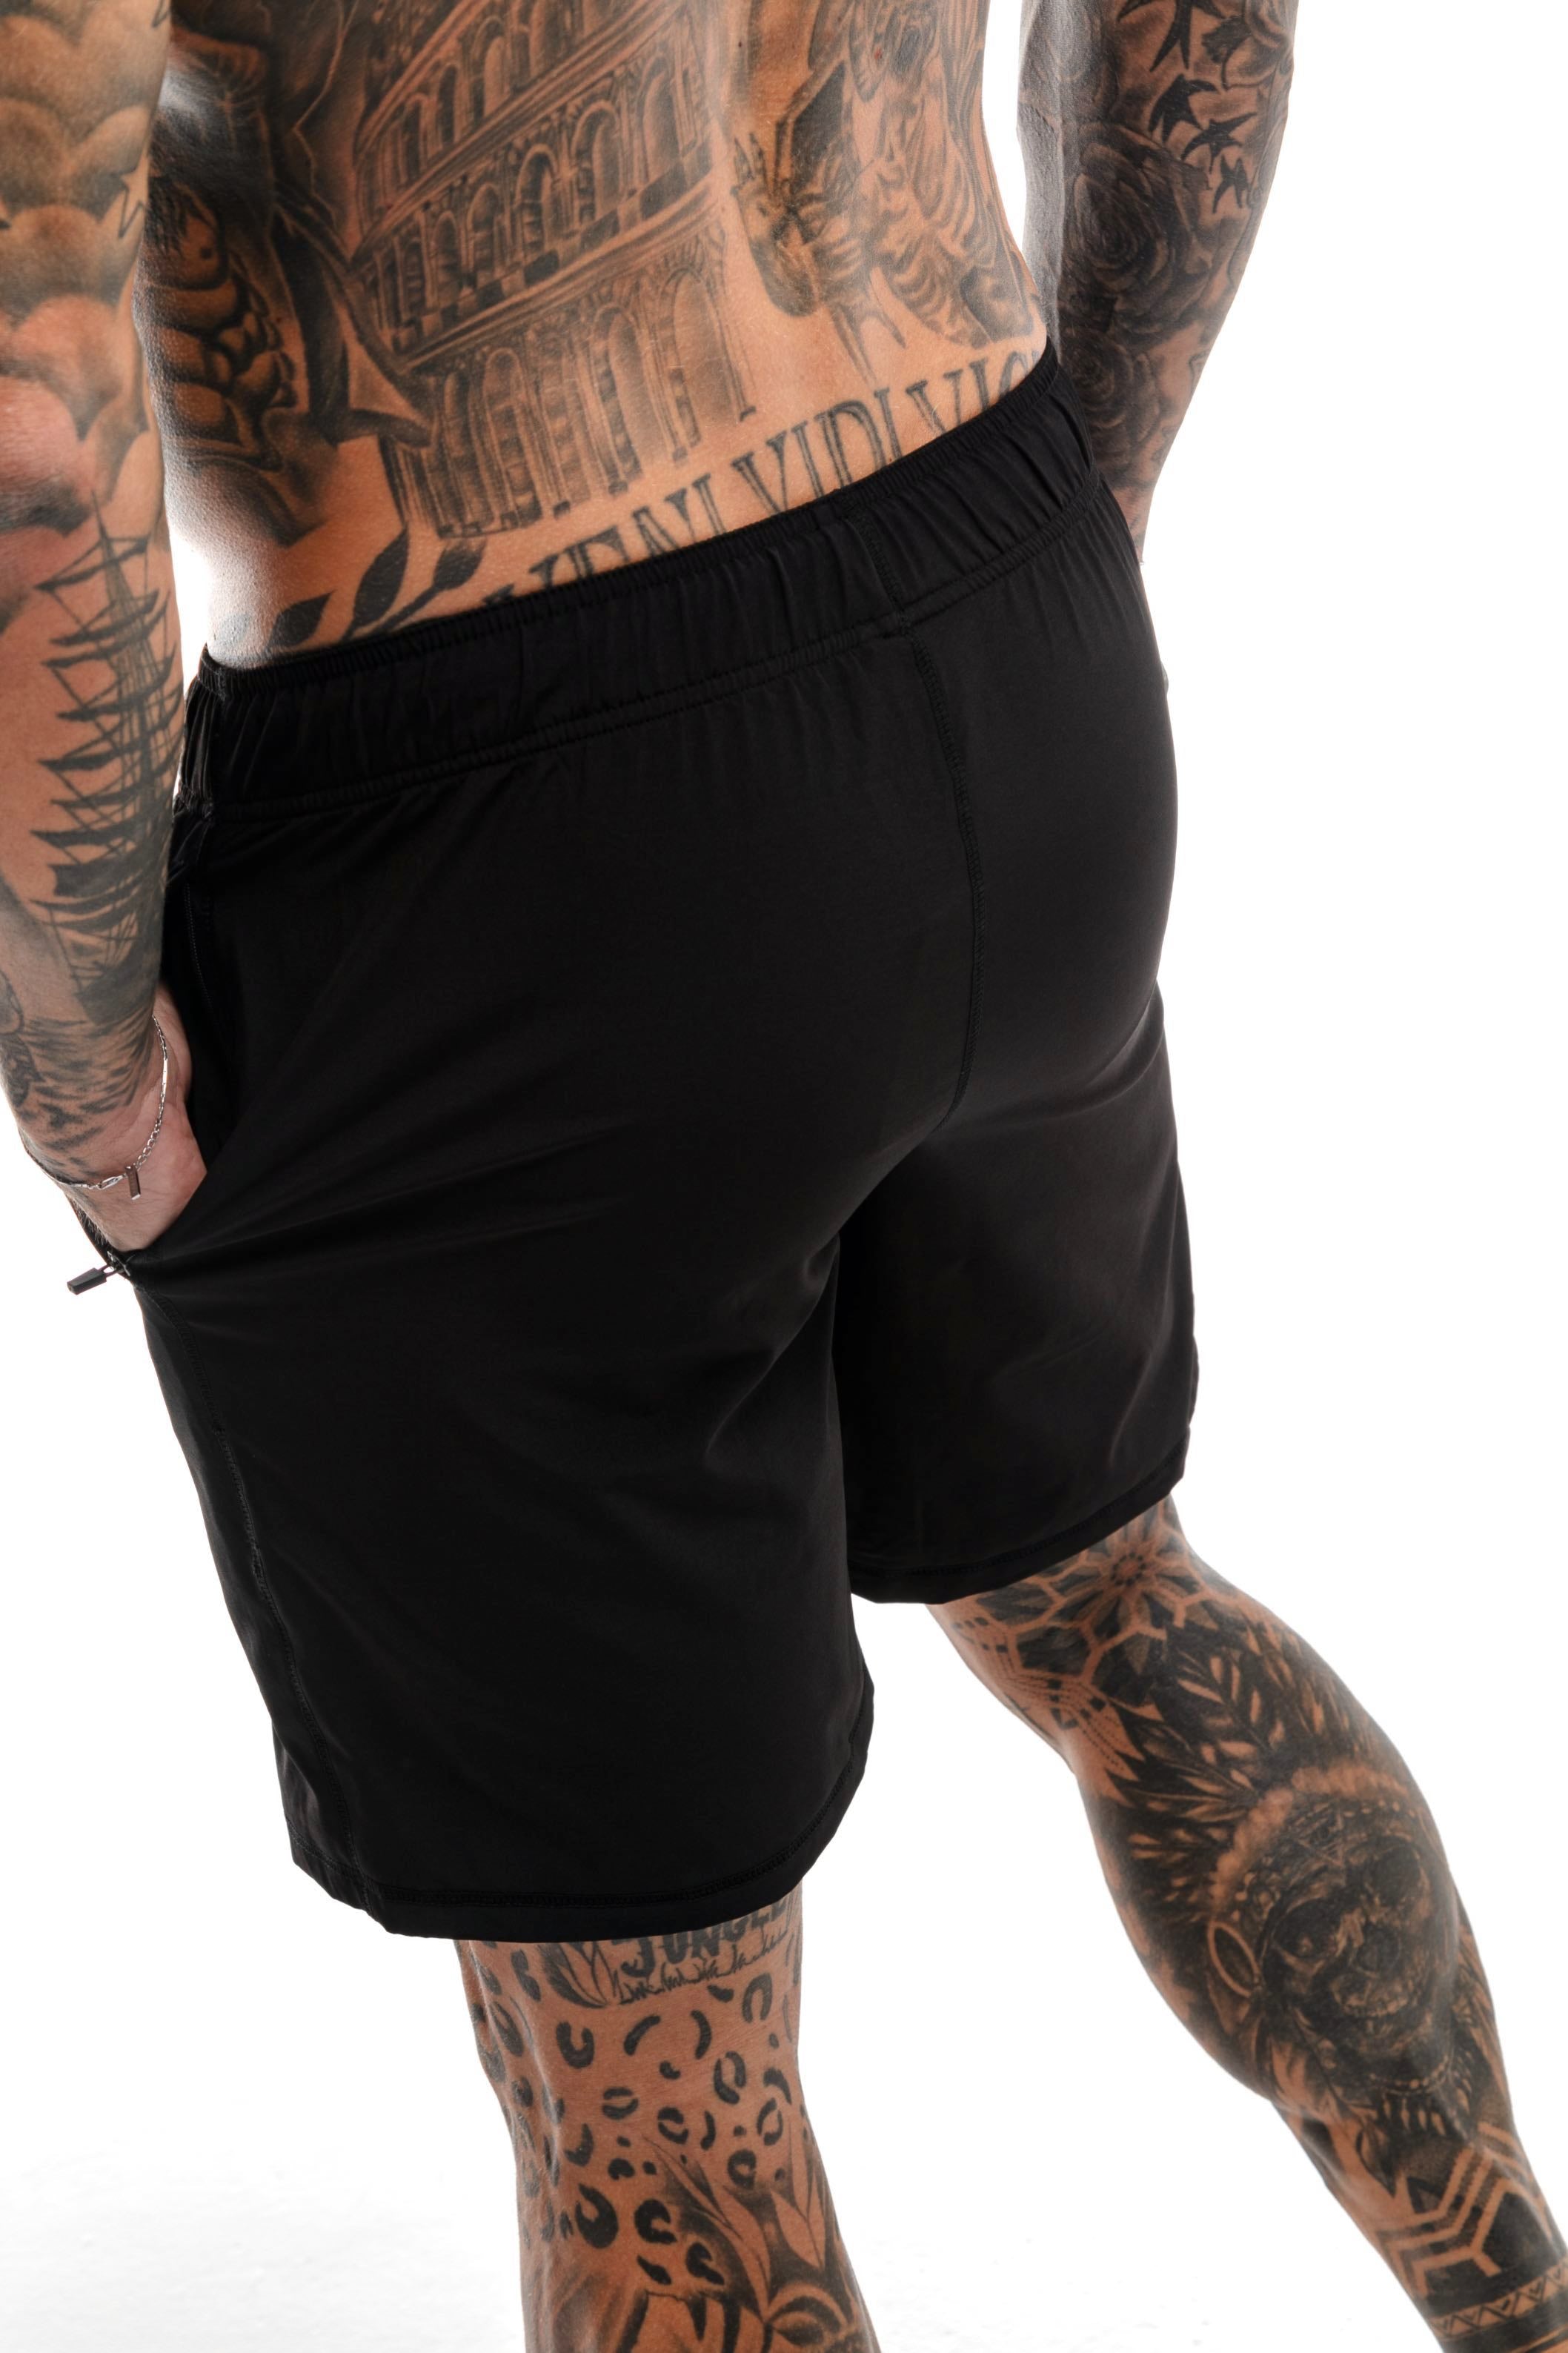 GymFreak Mens 365 Shorts - Black - 7 inch